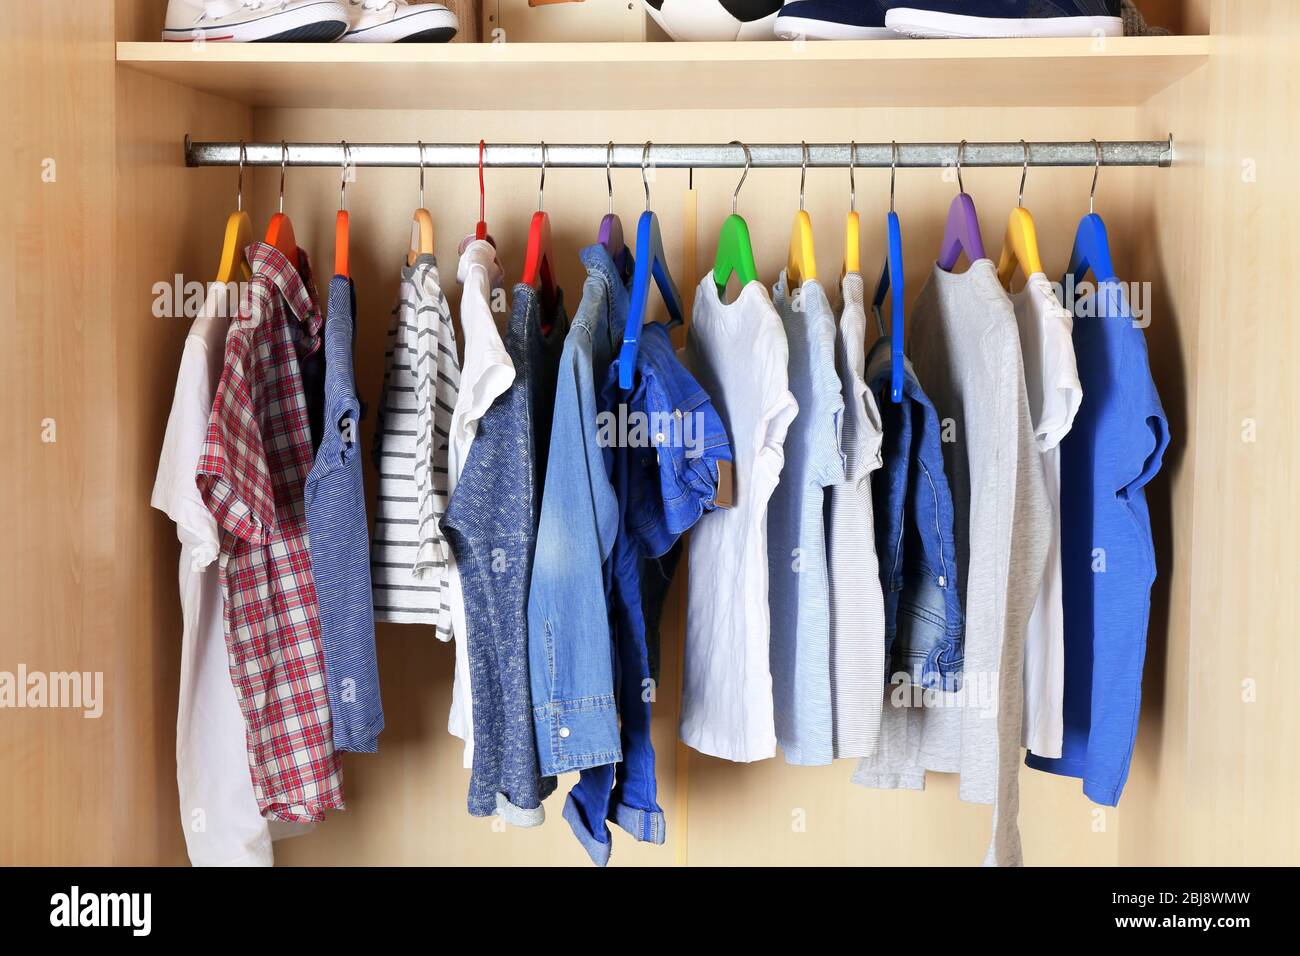 https://c8.alamy.com/comp/2BJ8WMW/boy-clothes-on-hangers-in-the-wardrobe-2BJ8WMW.jpg